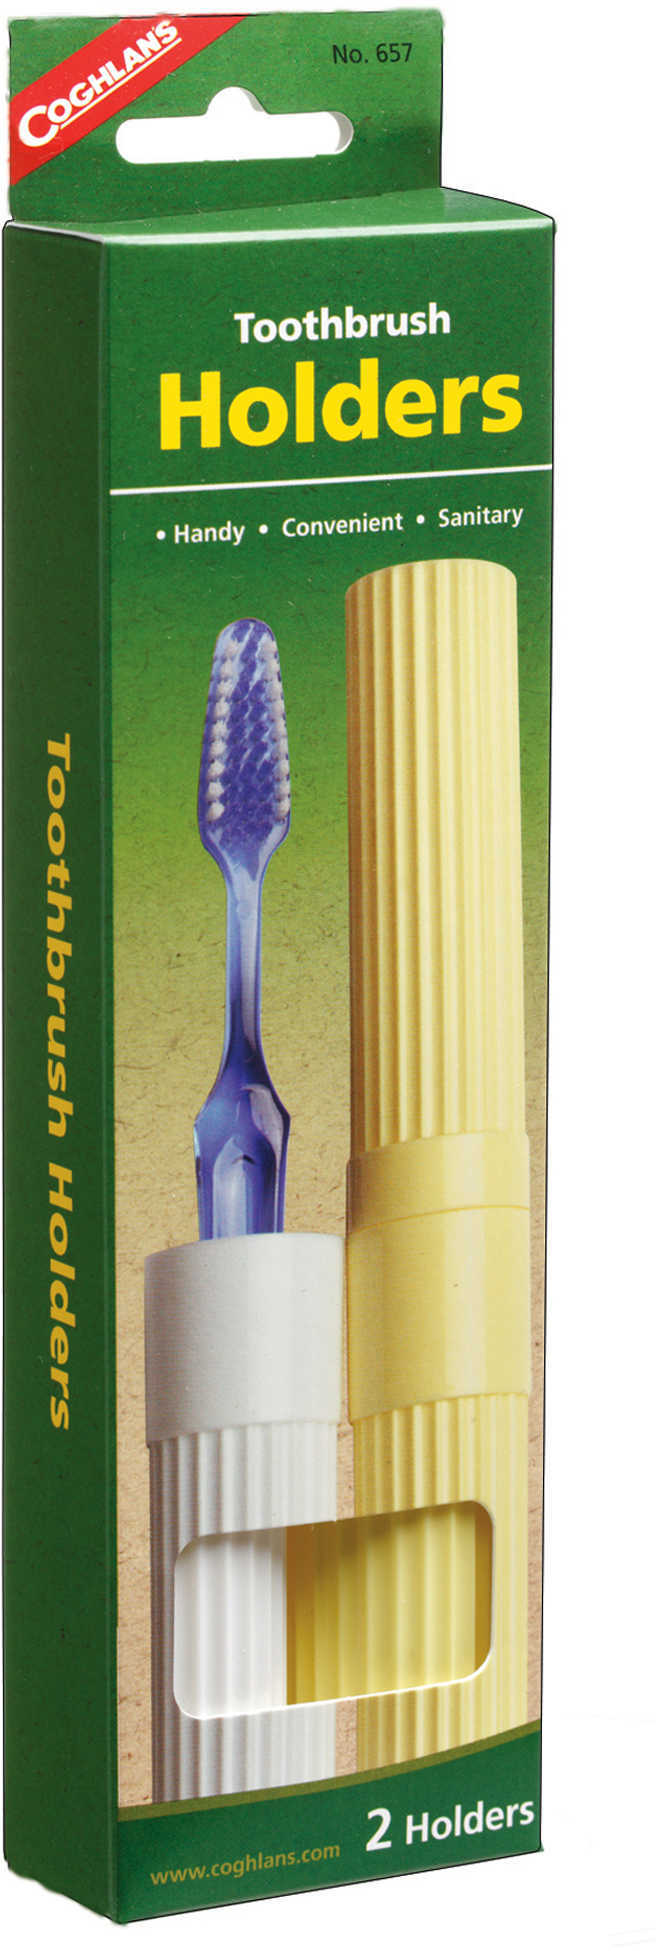 Coghlans Toothbrush Holders - Package of 2 657